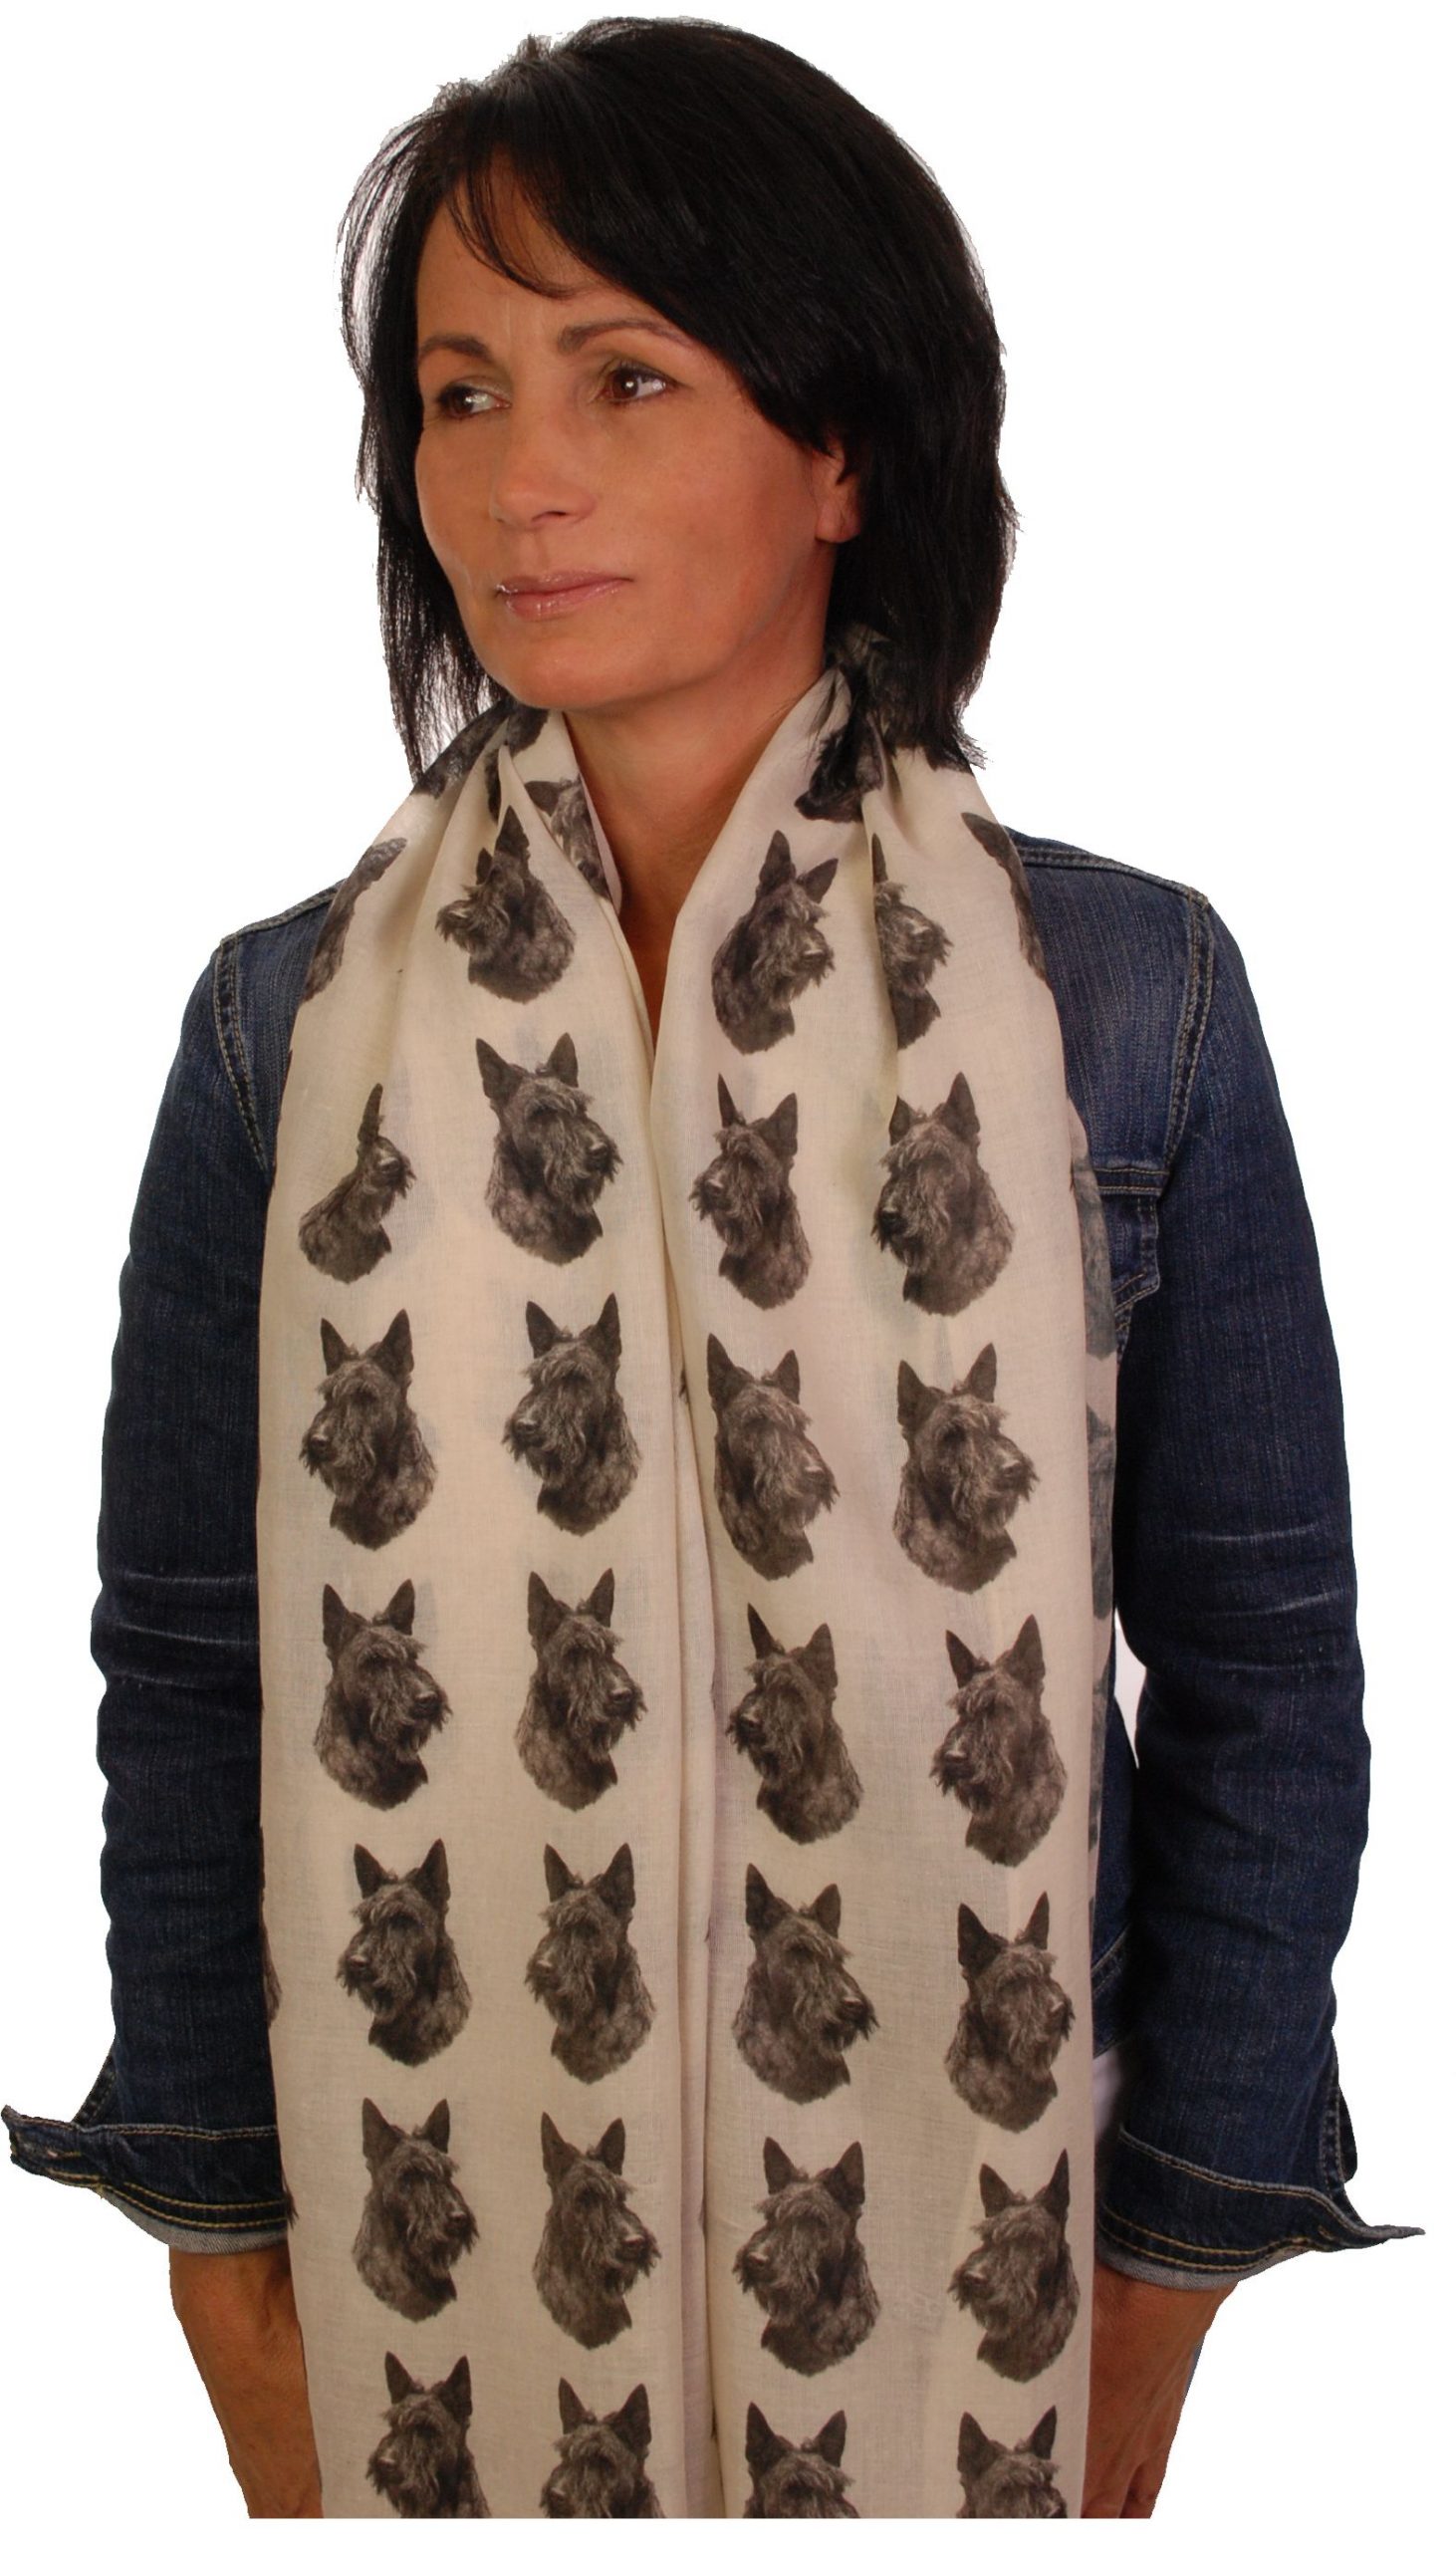 Mike Sibley Scottish Terrier licensed design ladies fashion scarf